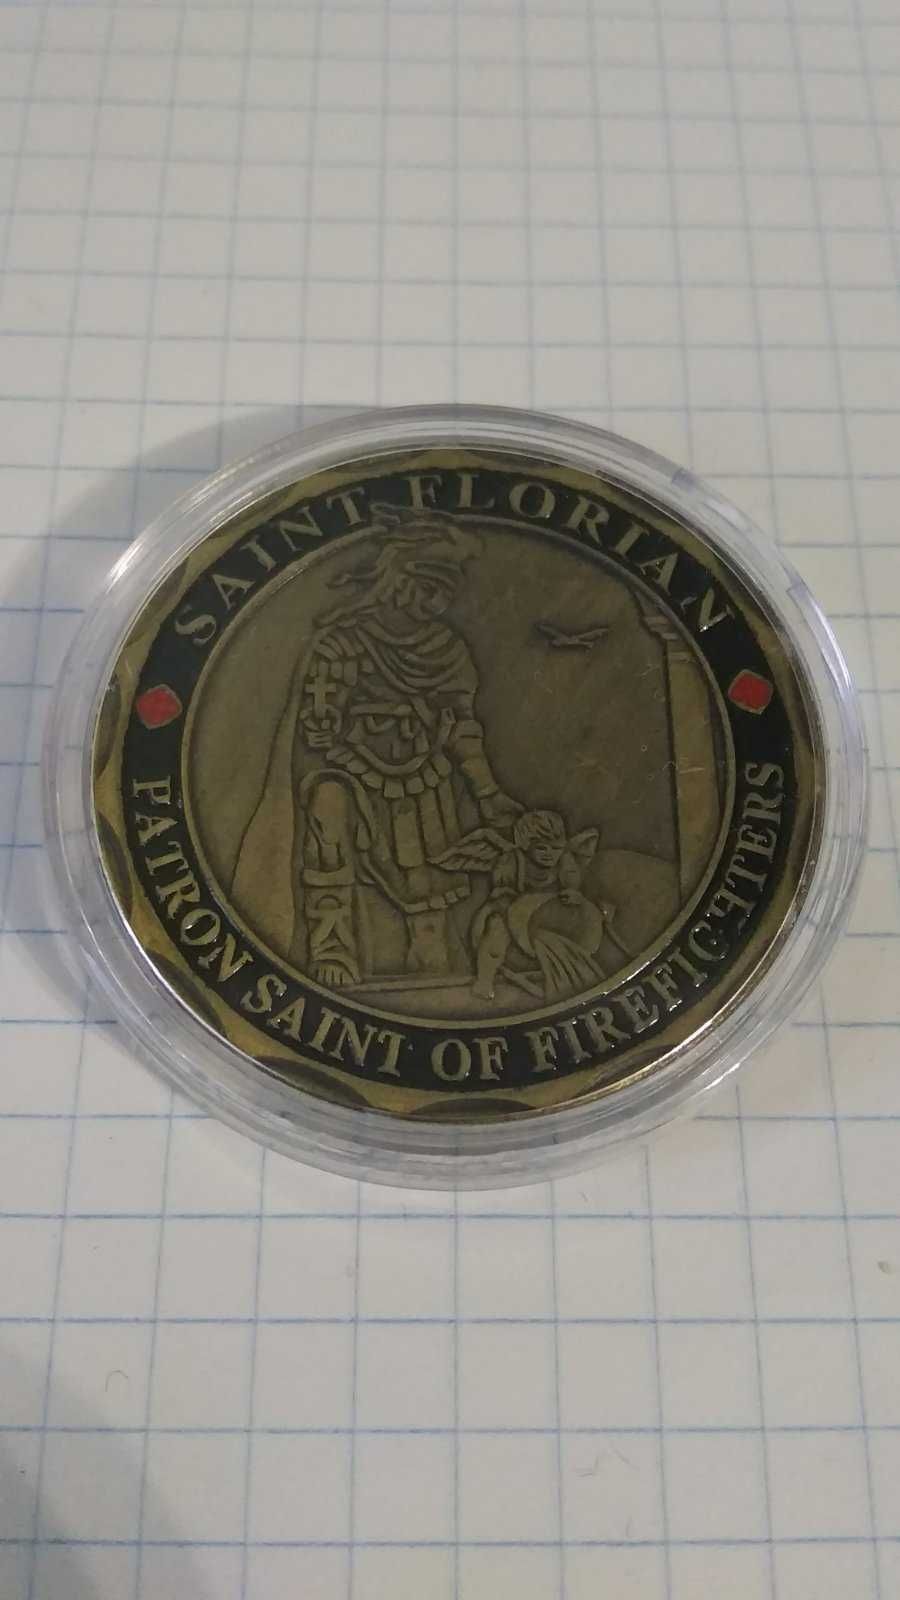 Пам’ятна монета пожежної служби США. Атланта 1882. Пожежний порятунок.